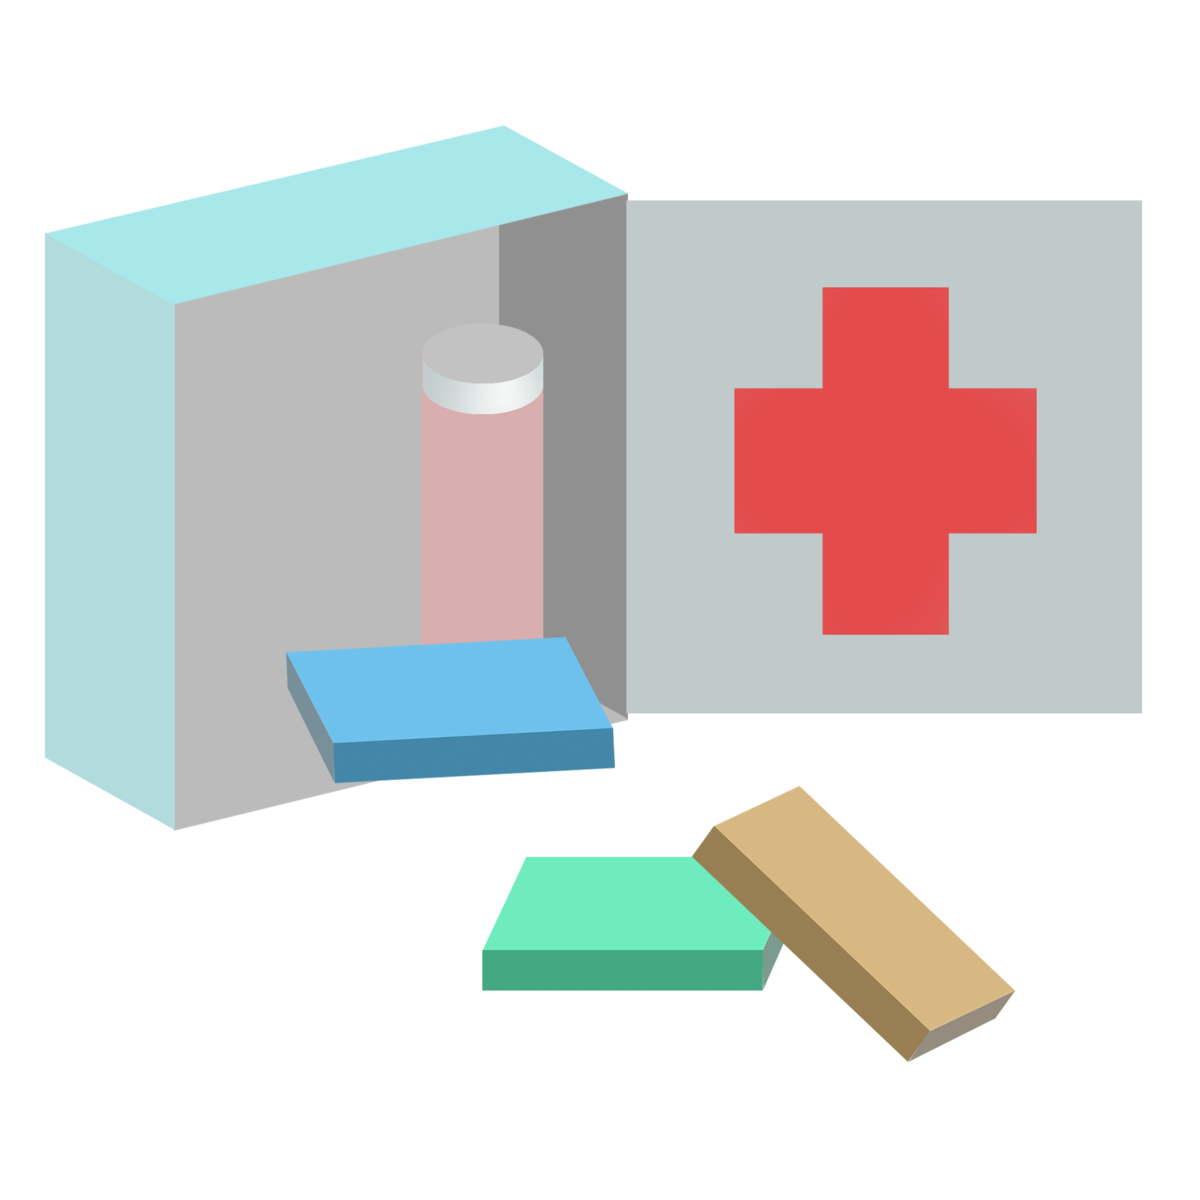 Pngtreepublic medical kit illustration 4628087 1